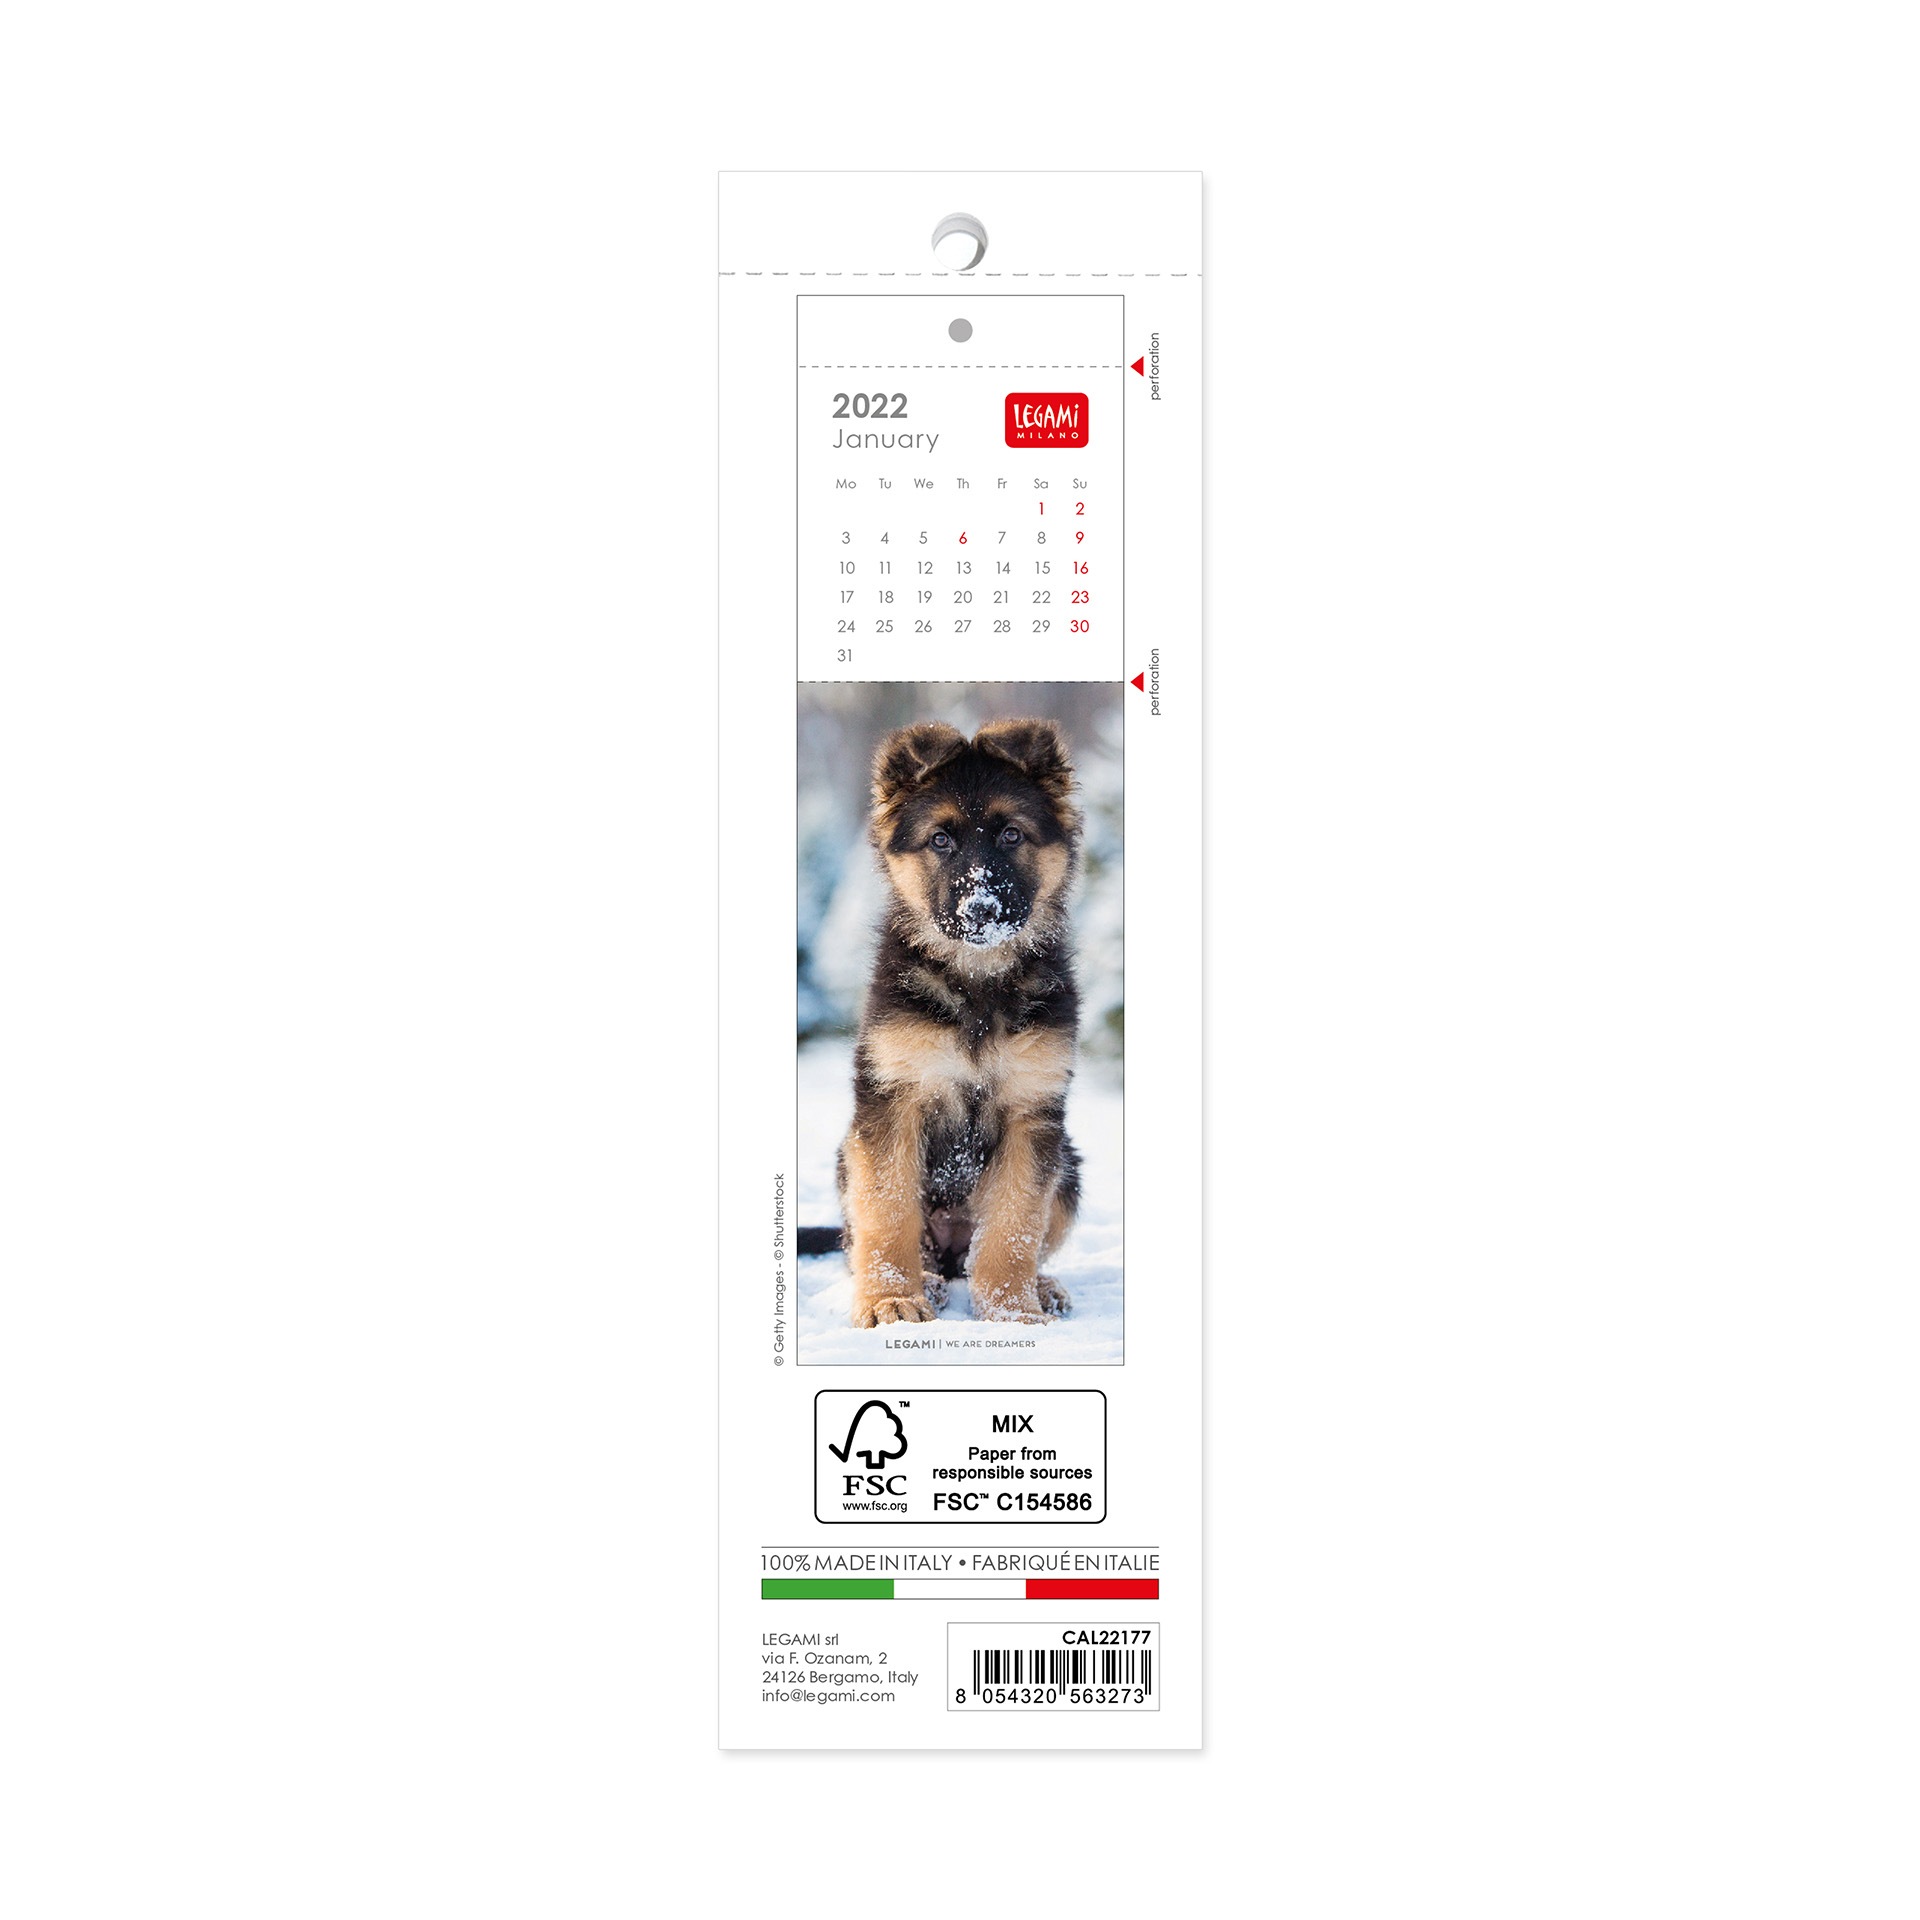 Puppies Calendrier de table 2022 Legami 12 x 14,5 cm